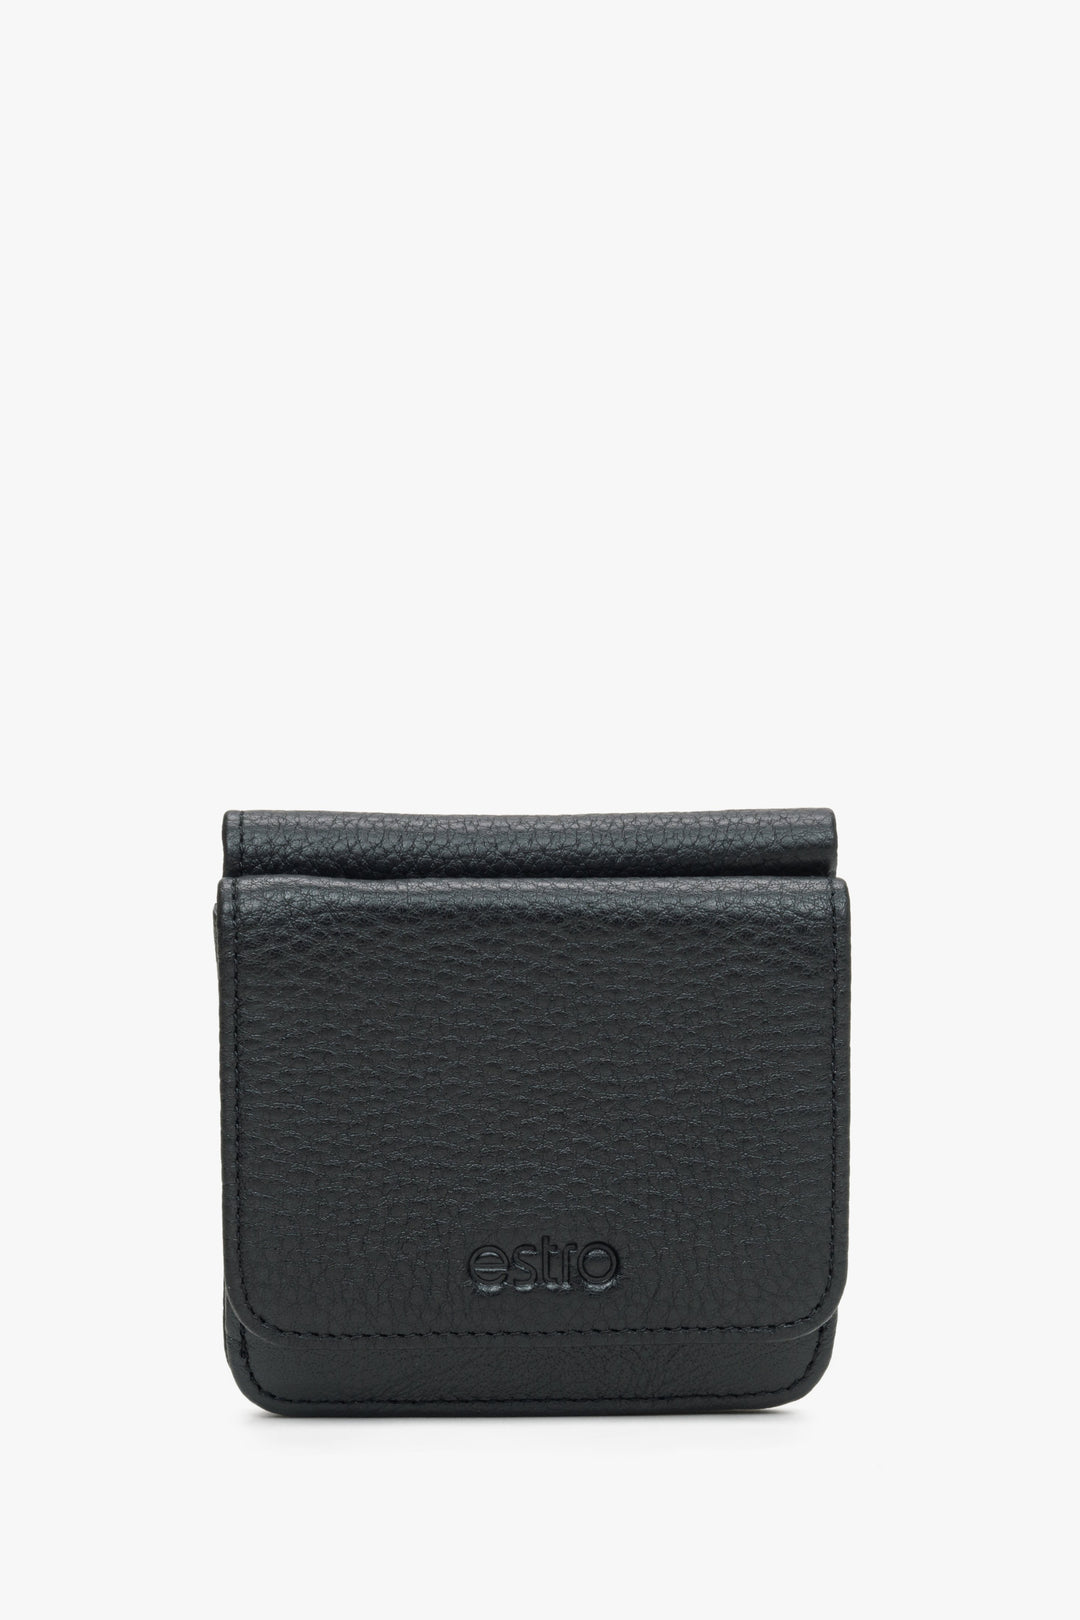 Men's Black Compact Billfold Style Wallet made of Genuine Leather Estro ER00114940.